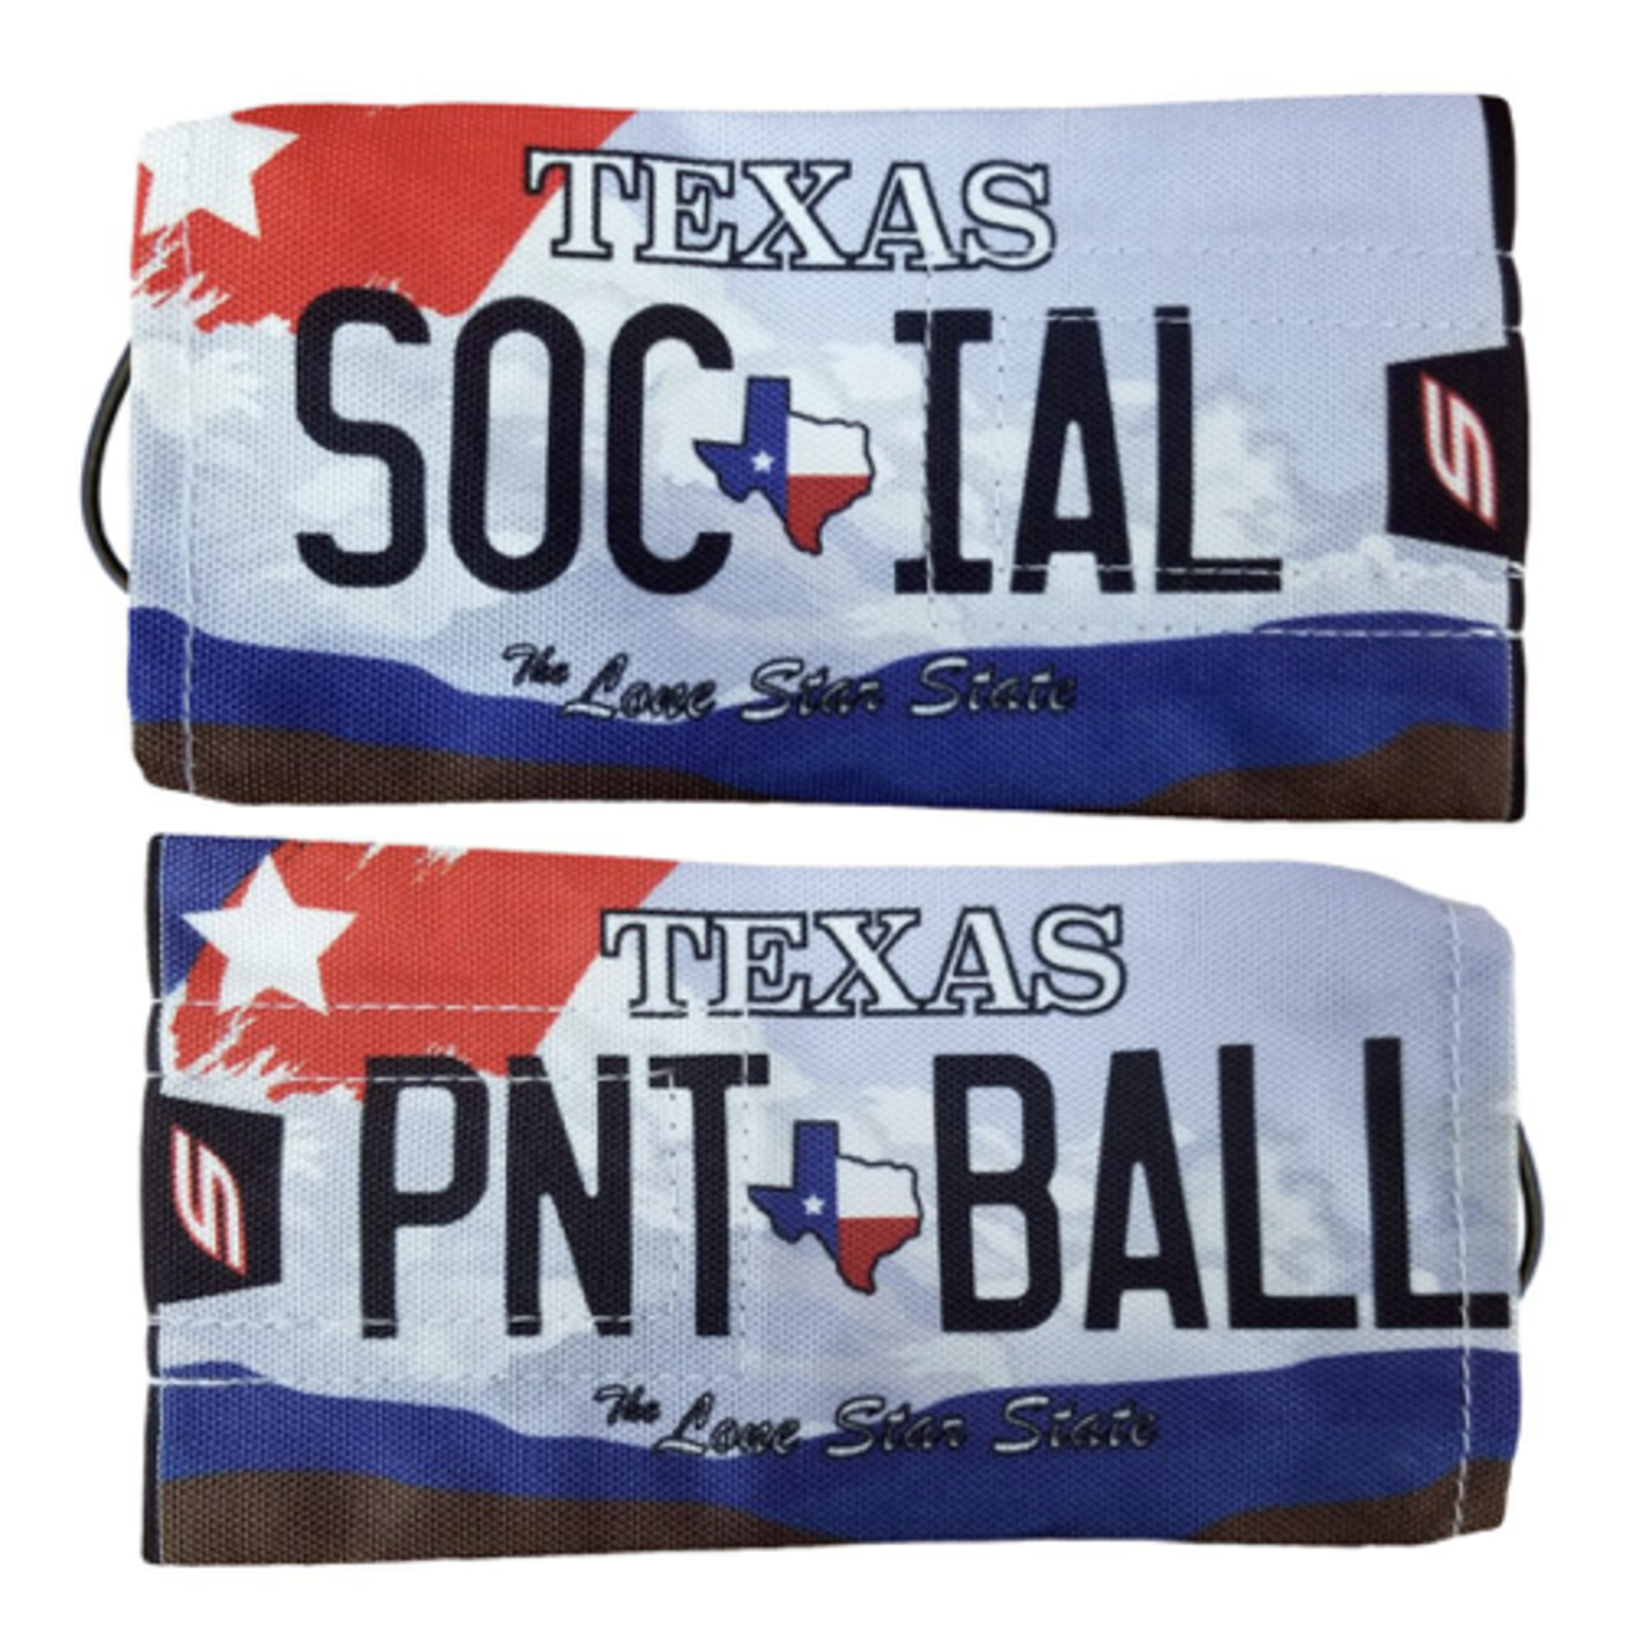 Social Paintball Social Paintball Barrel Cover